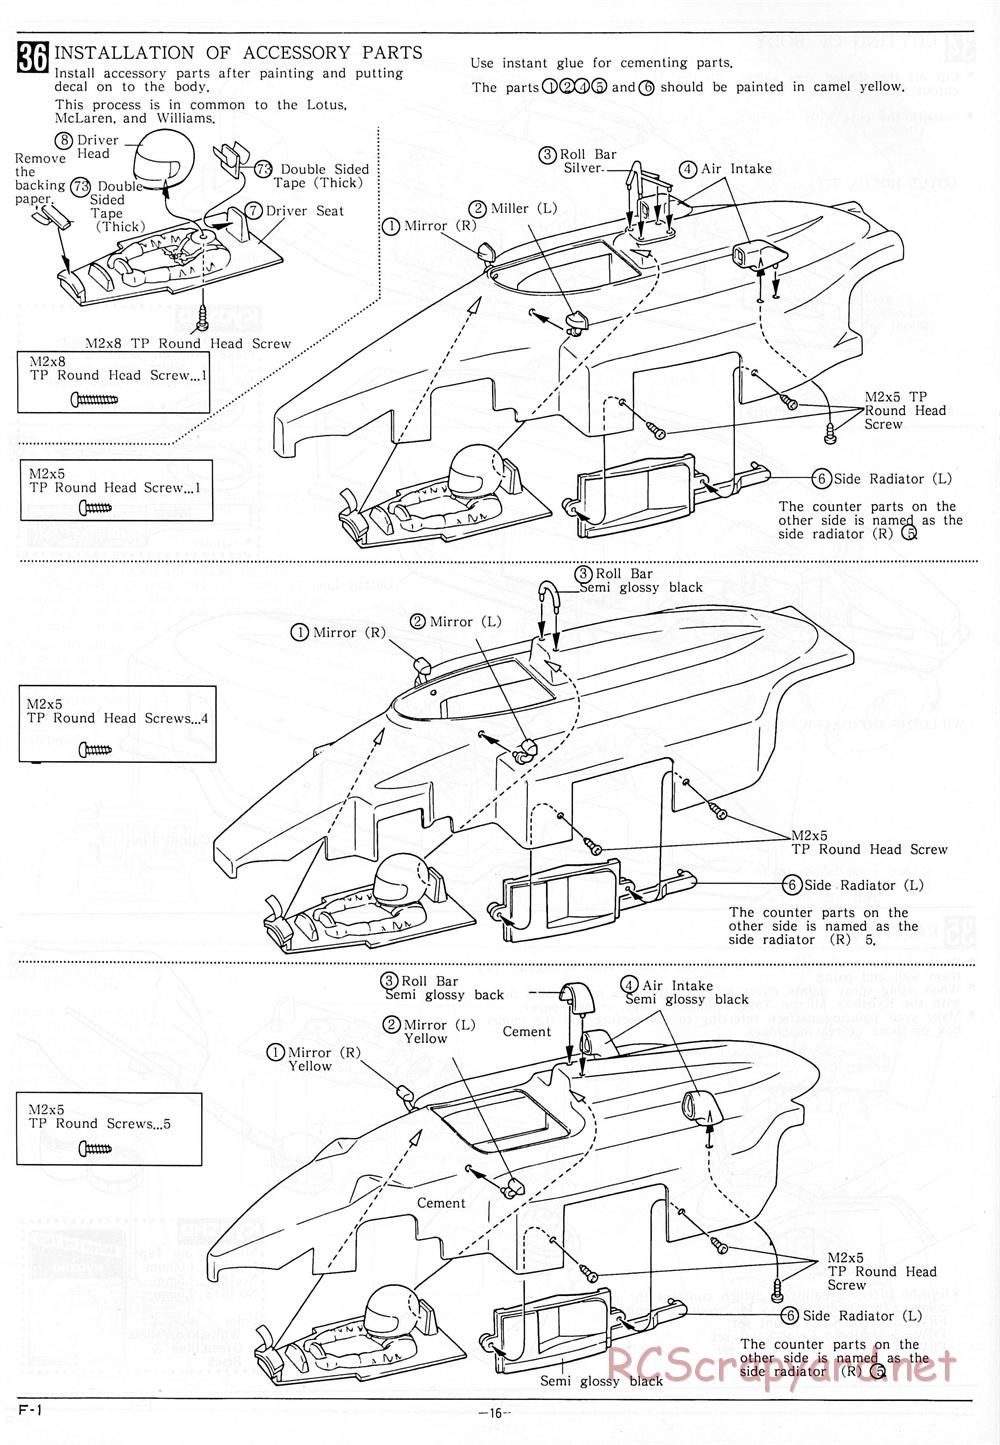 Kyosho - 1/18 Scale Formula One (F1) - Manual - Page 16